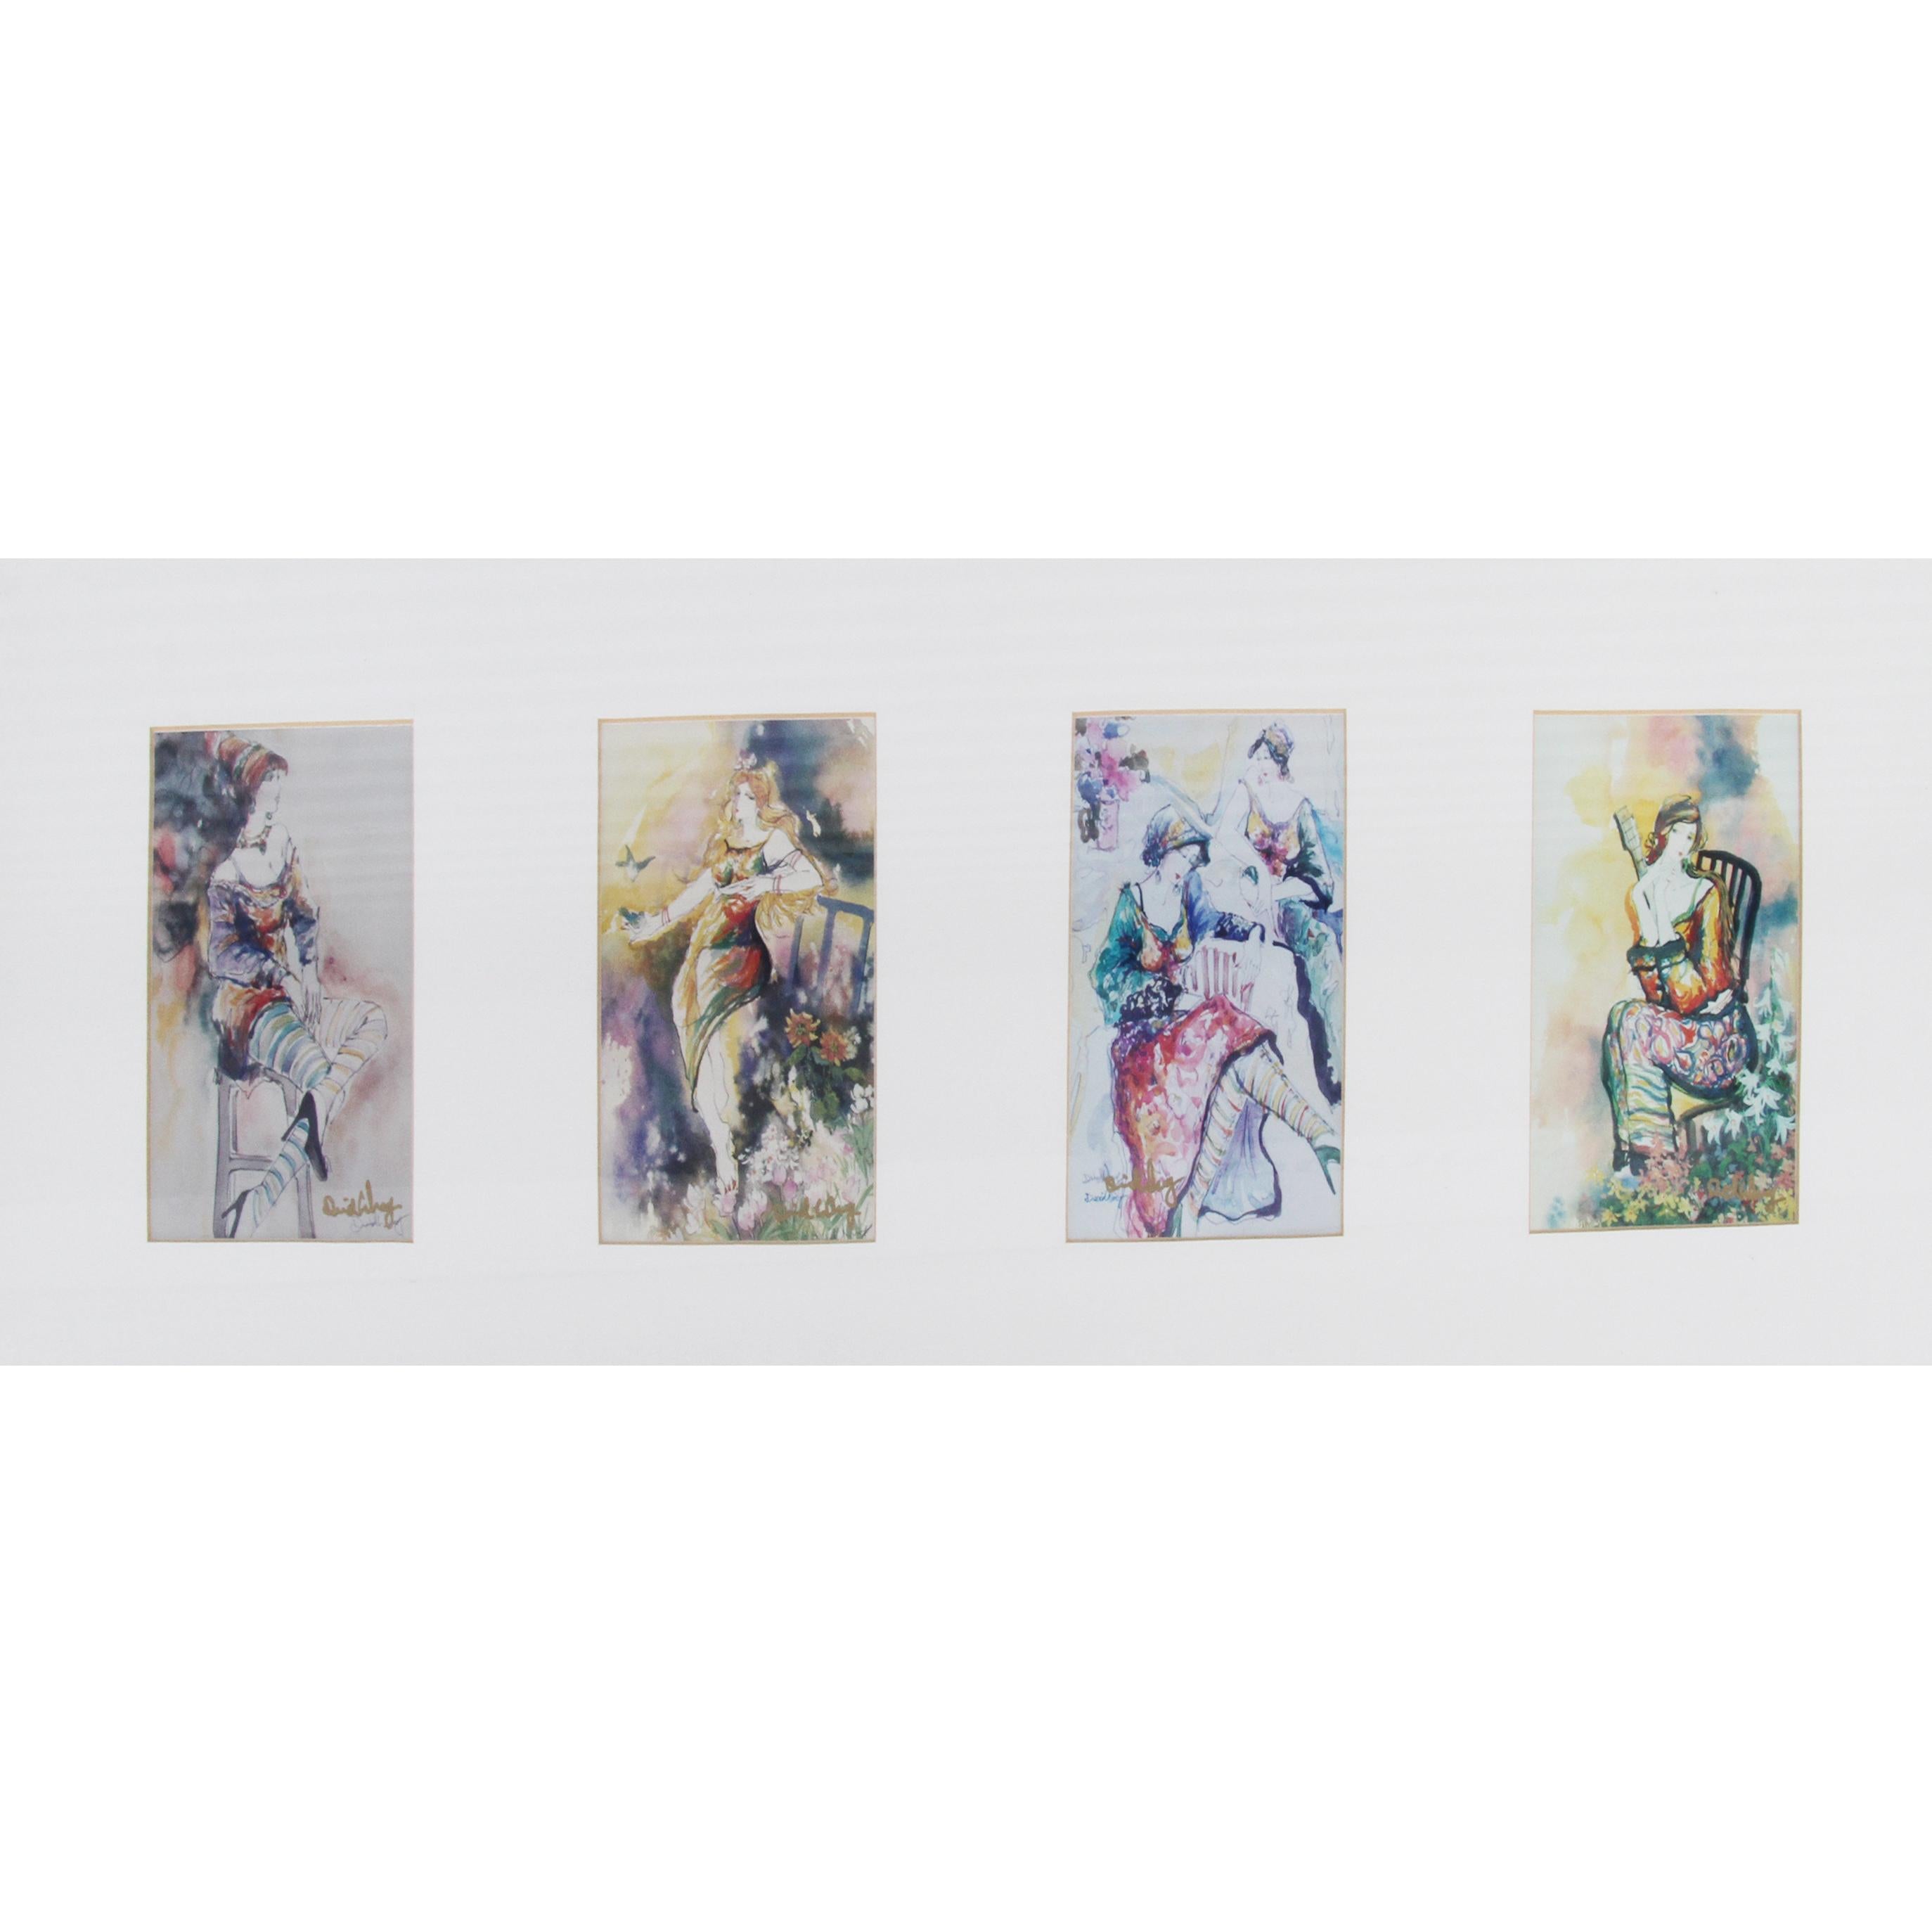 Set of Prints by David Wong

Each litho measures 3.5W x 5.25